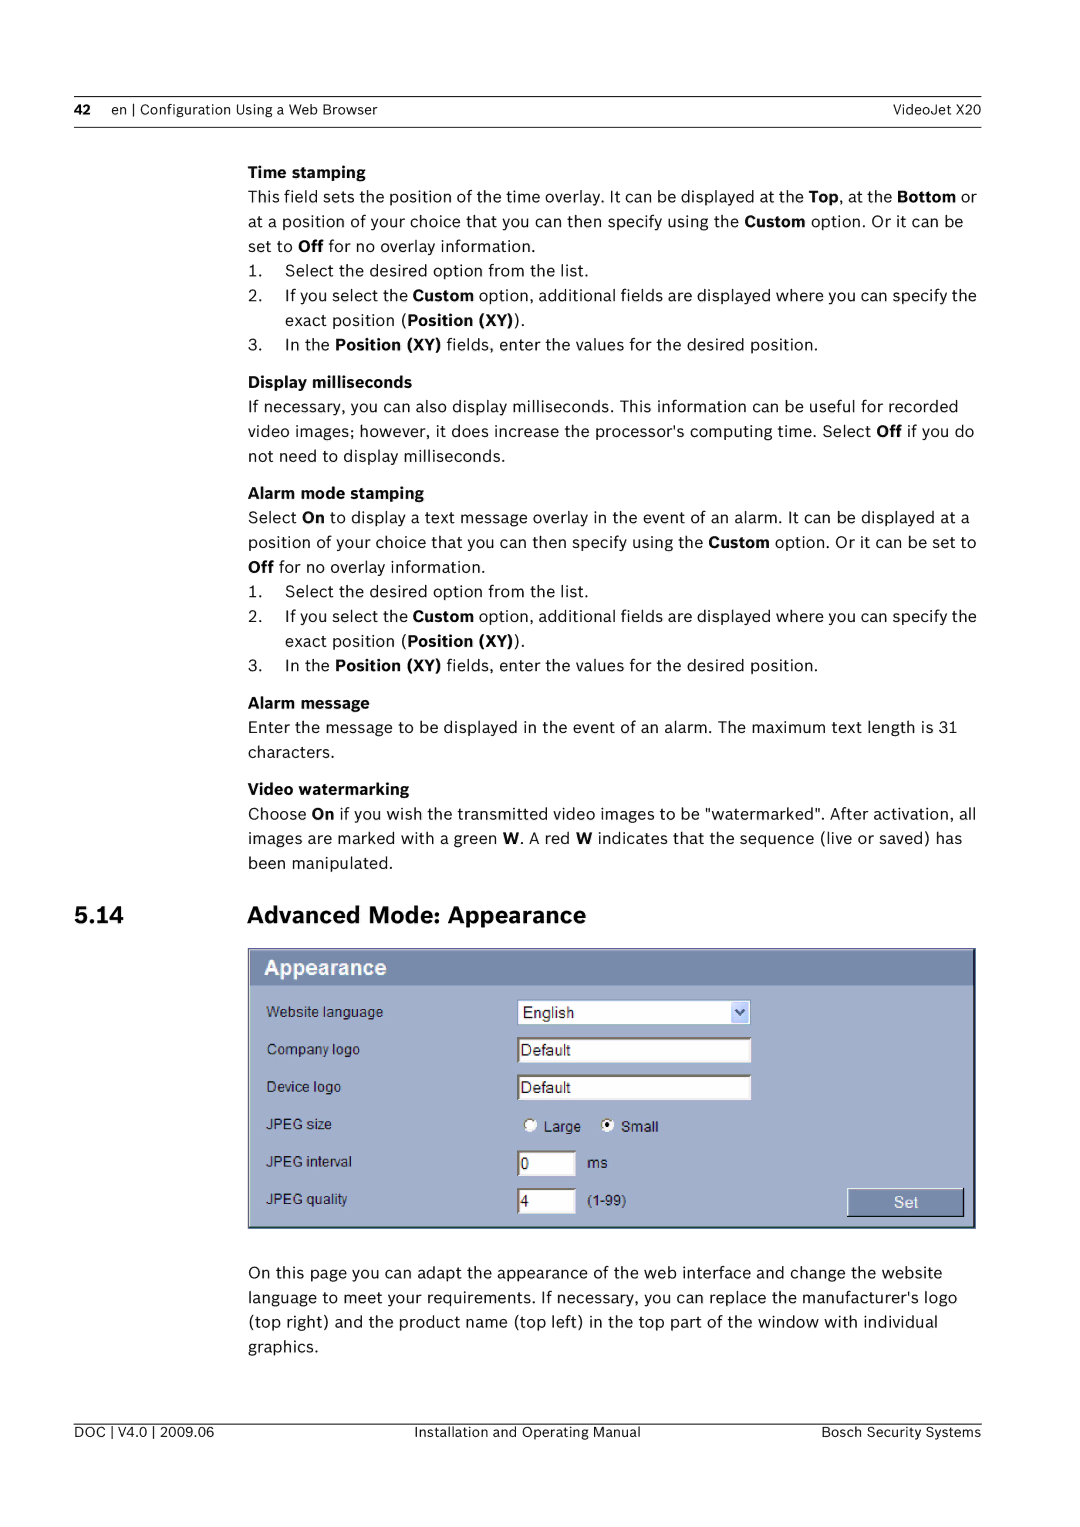 Bosch Appliances X20 manual Advanced Mode Appearance 